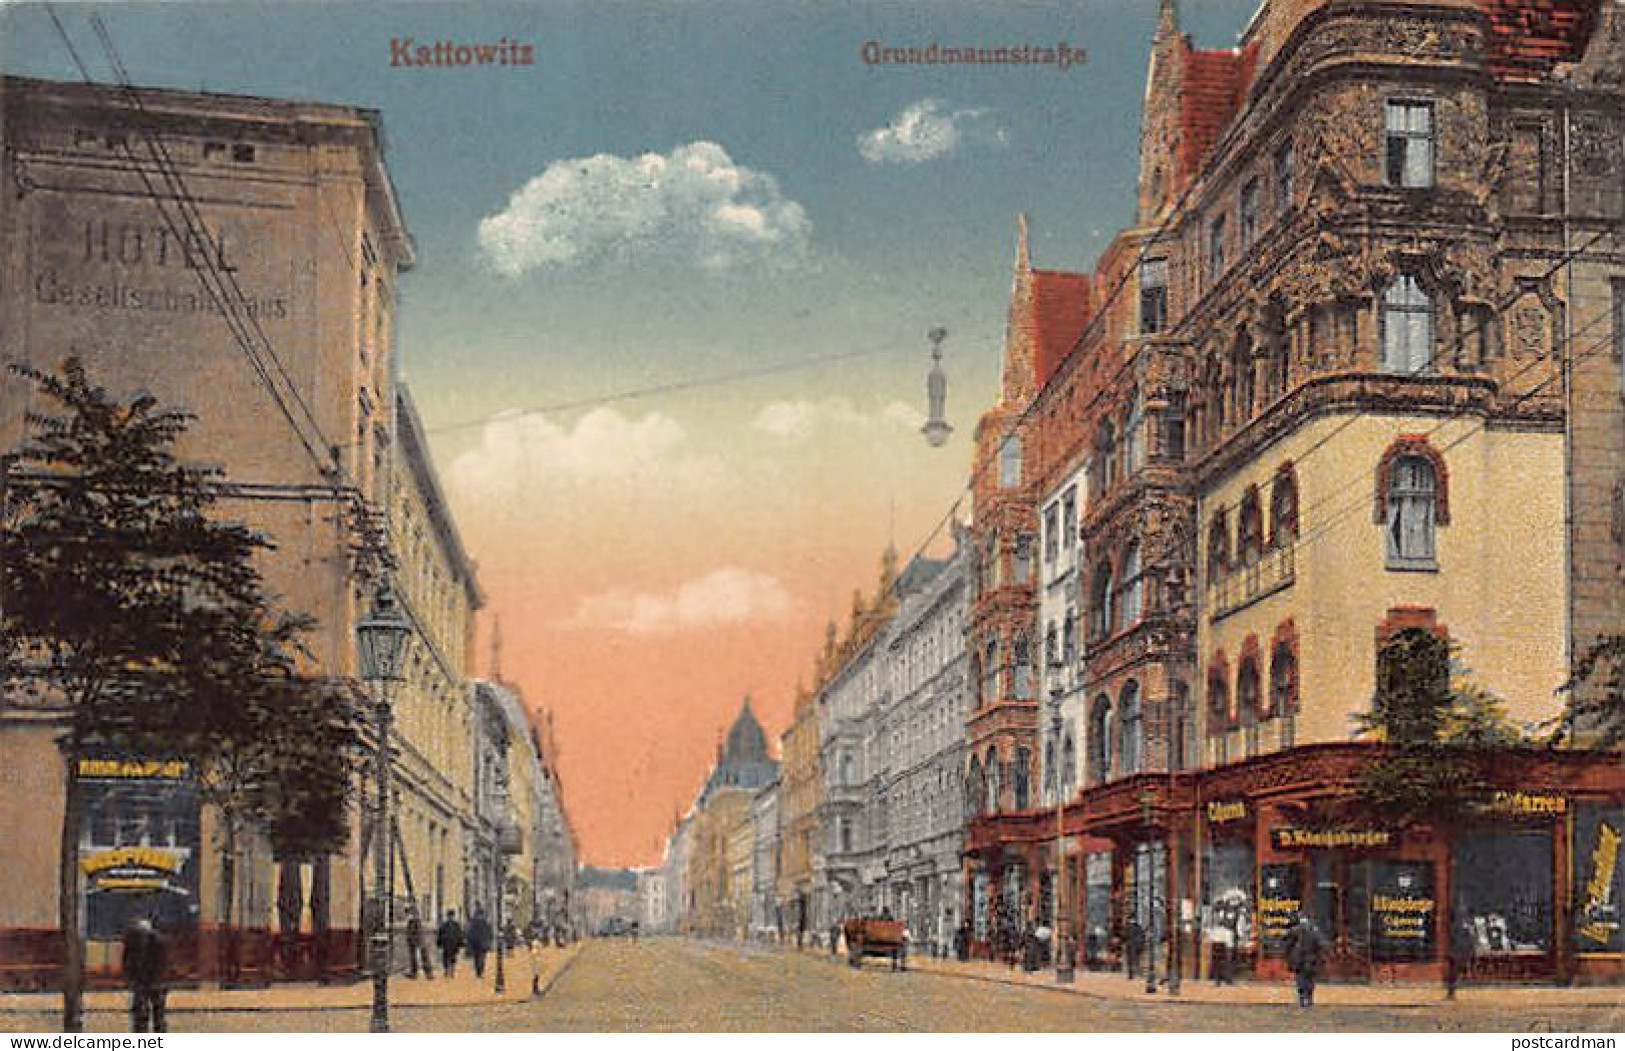 Poland - KATOWICE Kattowitz - Grundmannstrasse - Polen